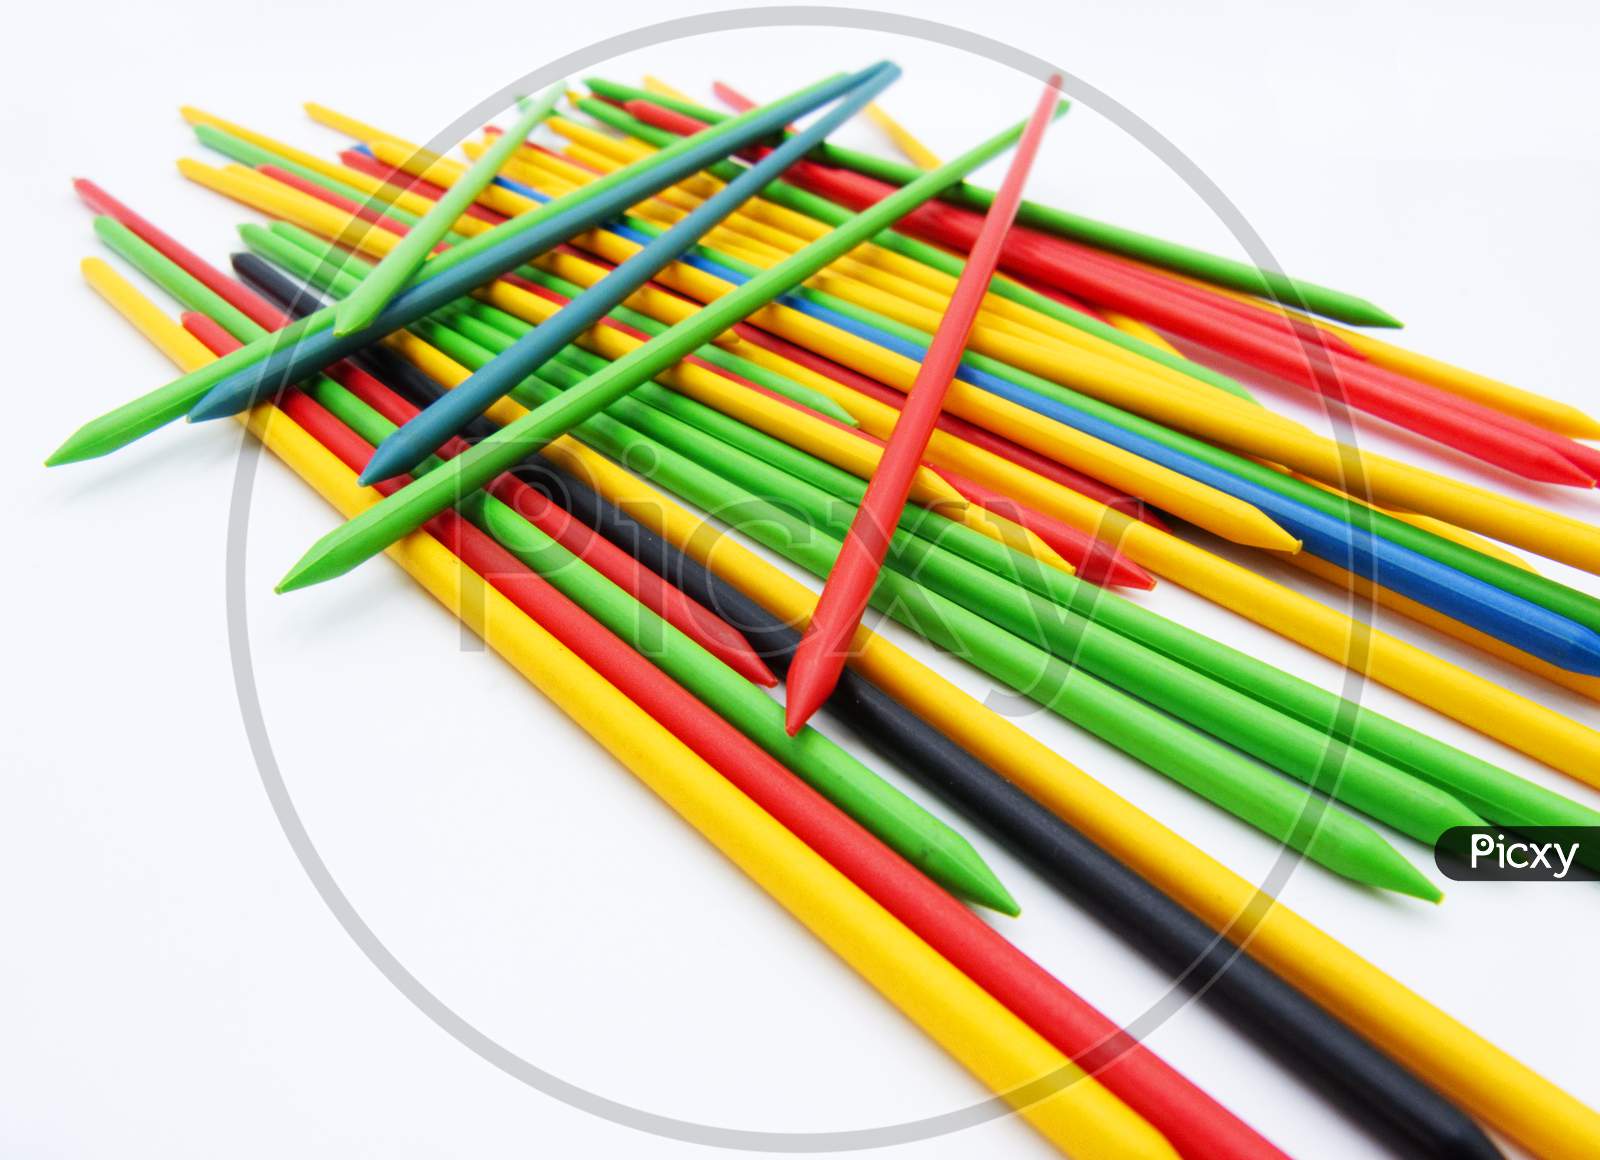 The game of shangai or mikado, colored plastic sticks